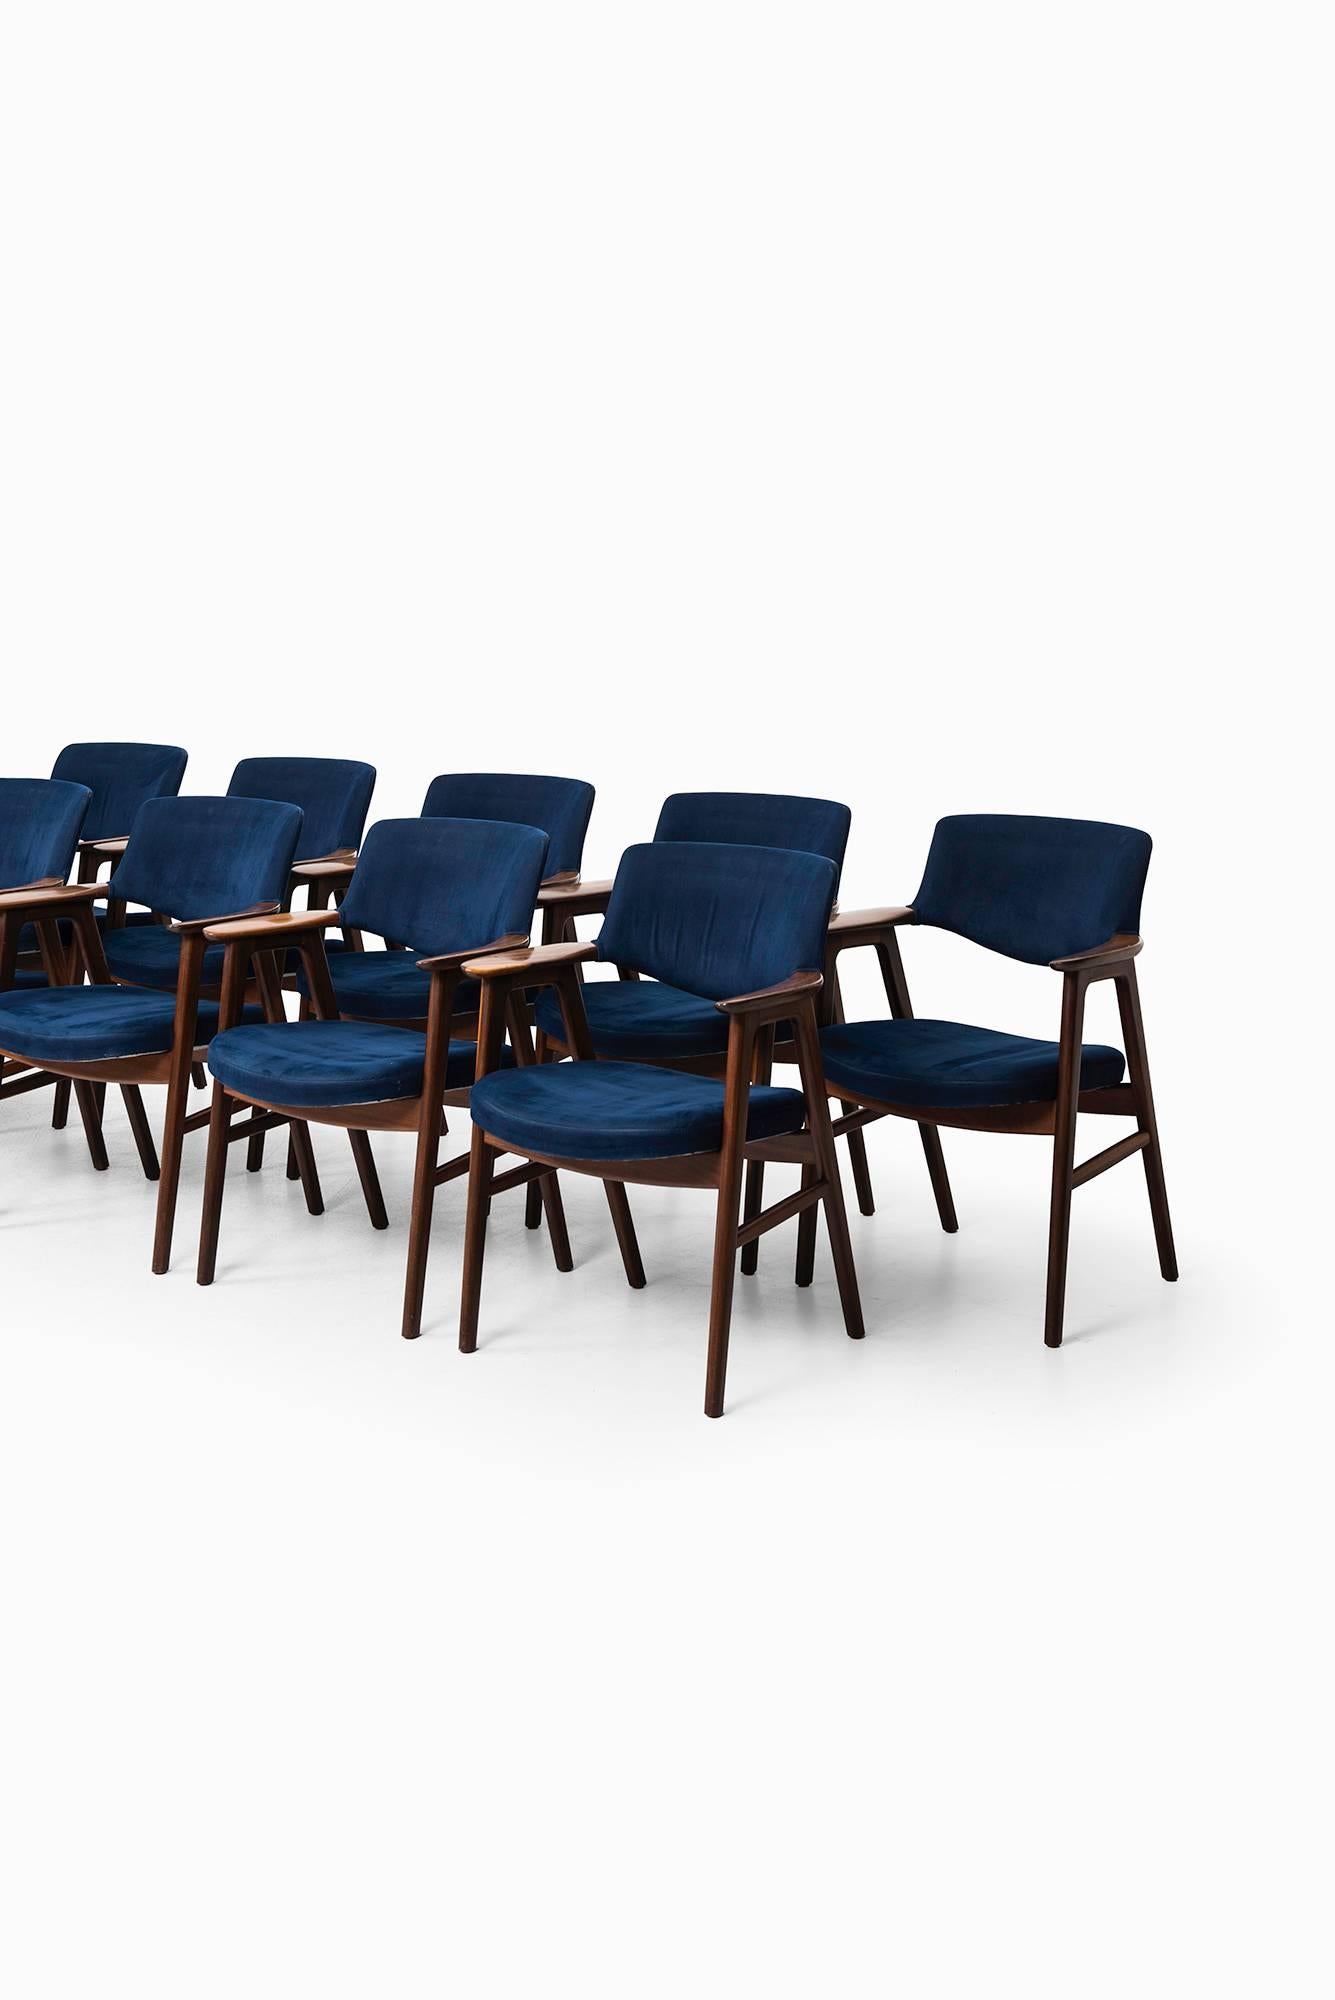 Rare set of ten armchairs designed by Erik Kirkegaard. Produced by Høng Stolefabrik in Denmark.